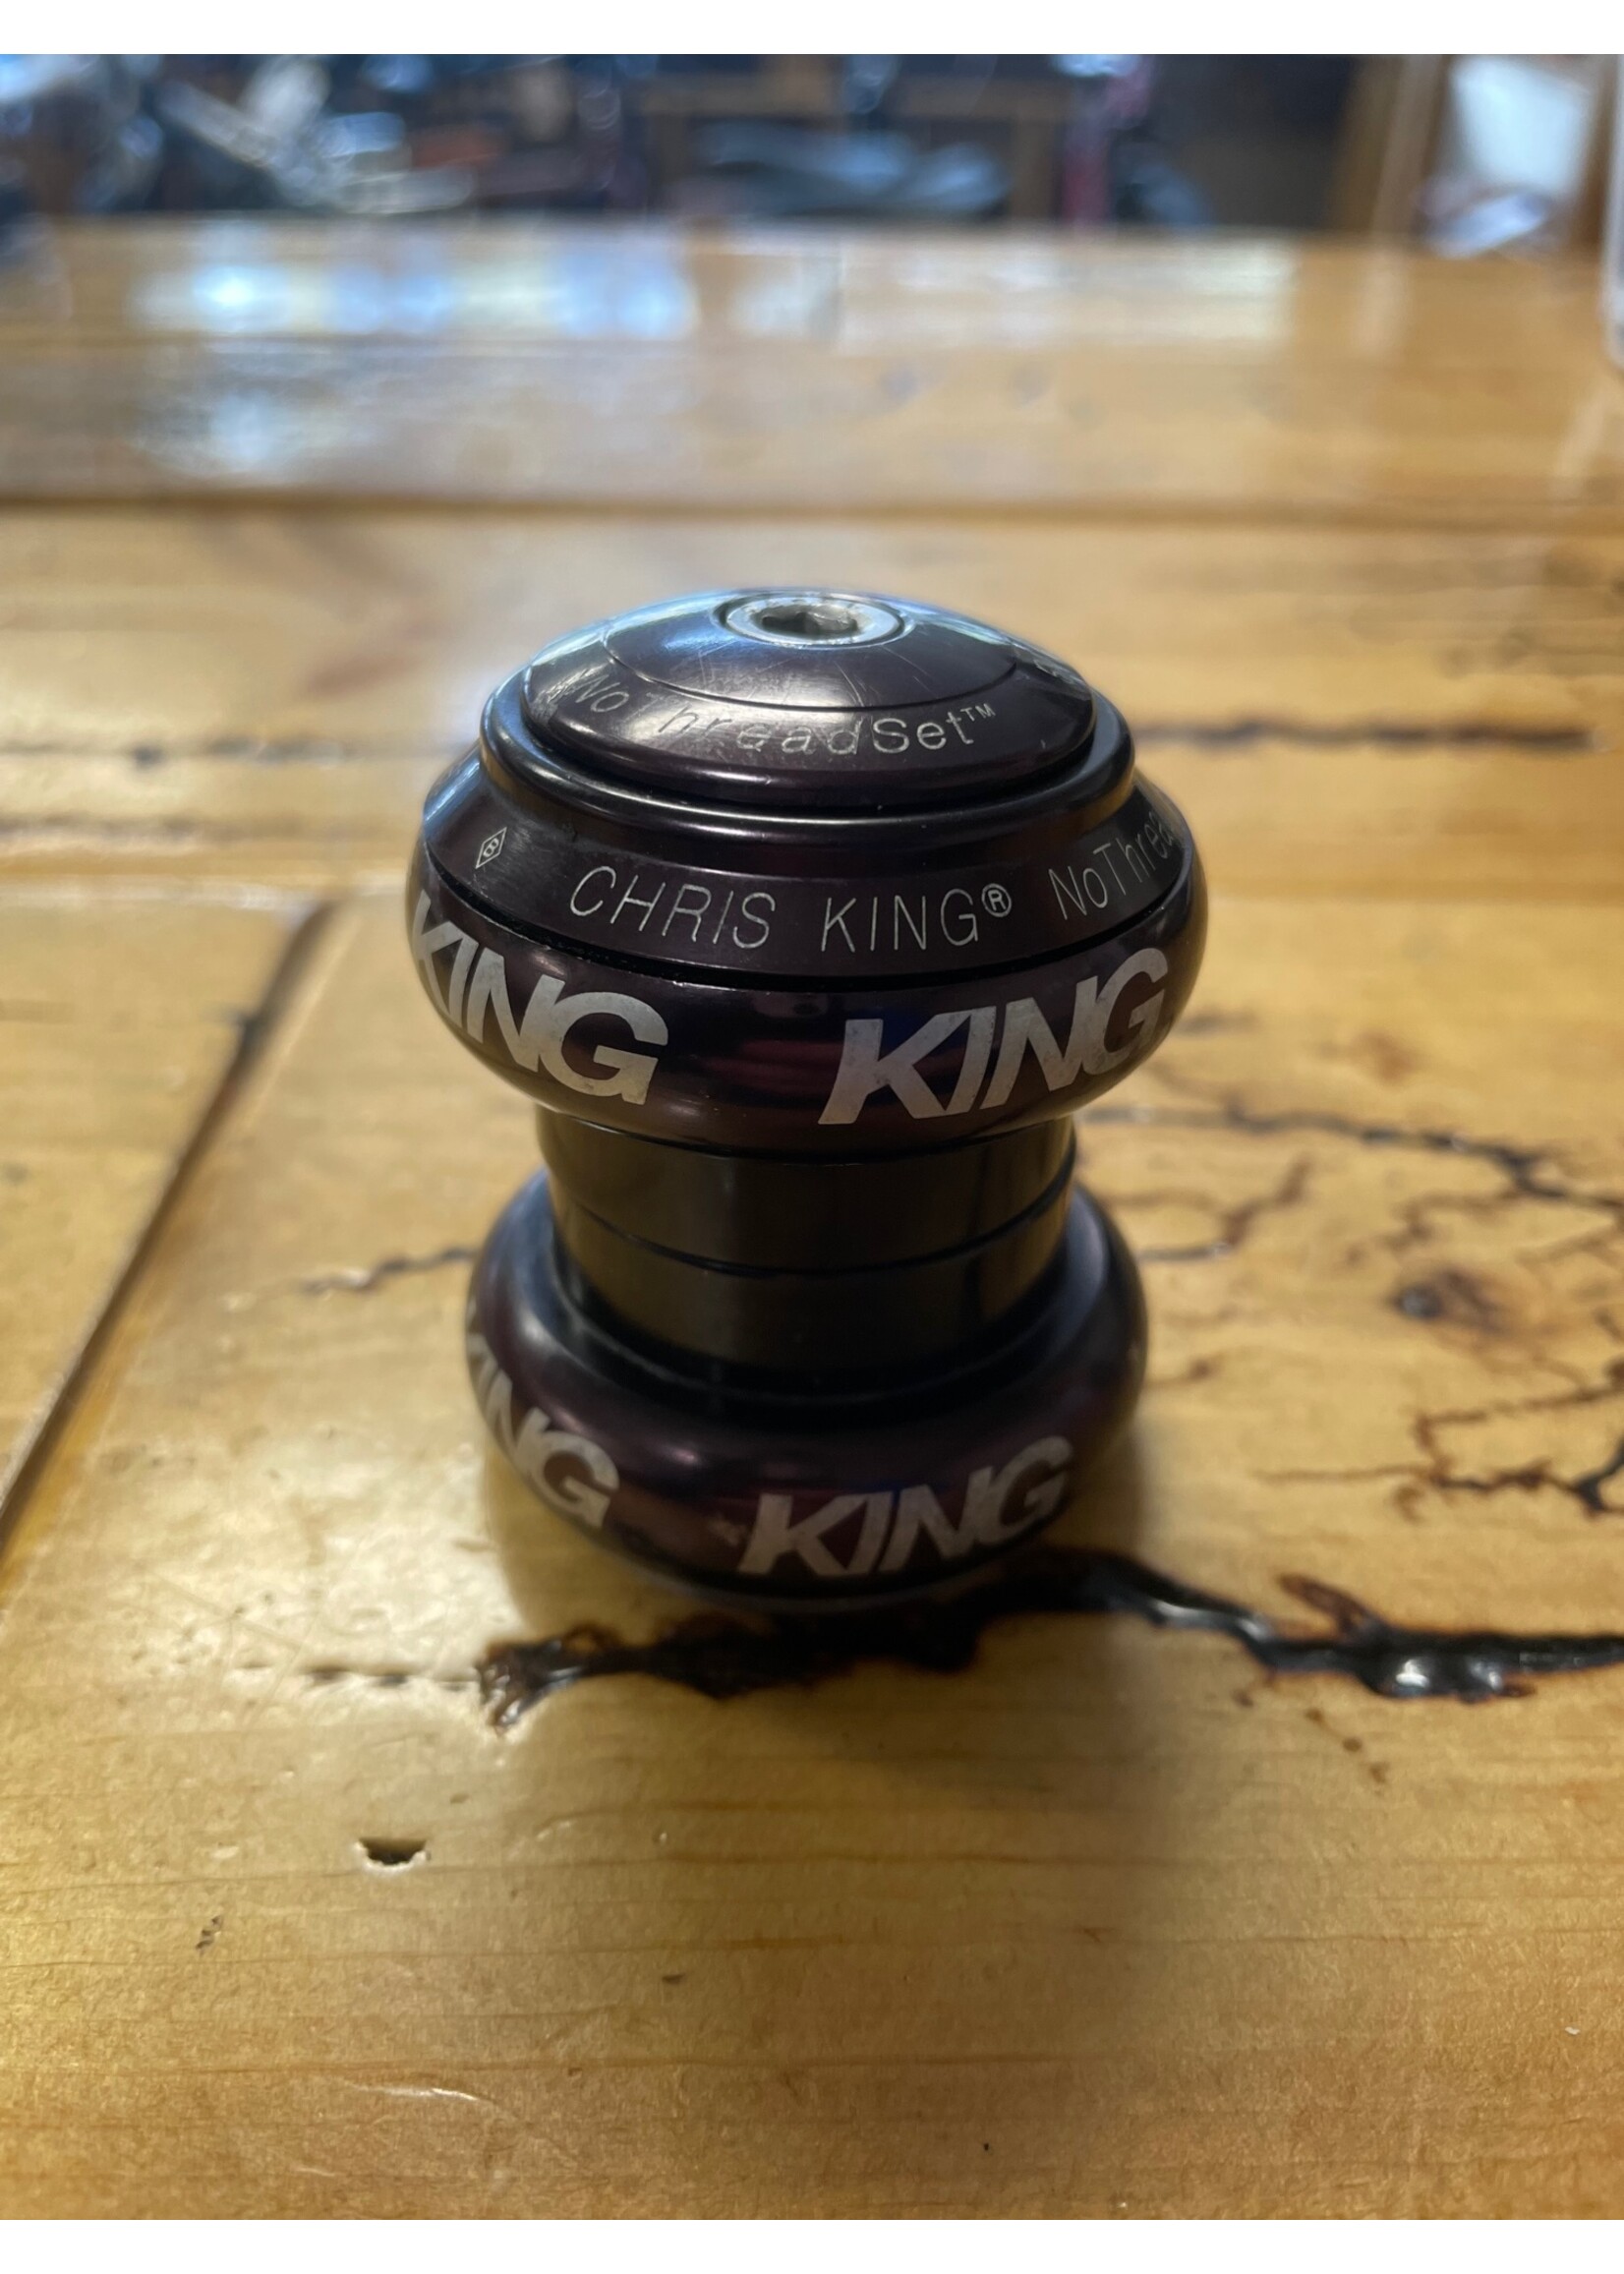 Chris King Chris King 1 1/8 Inch Nothreadset Threadless Black Headset